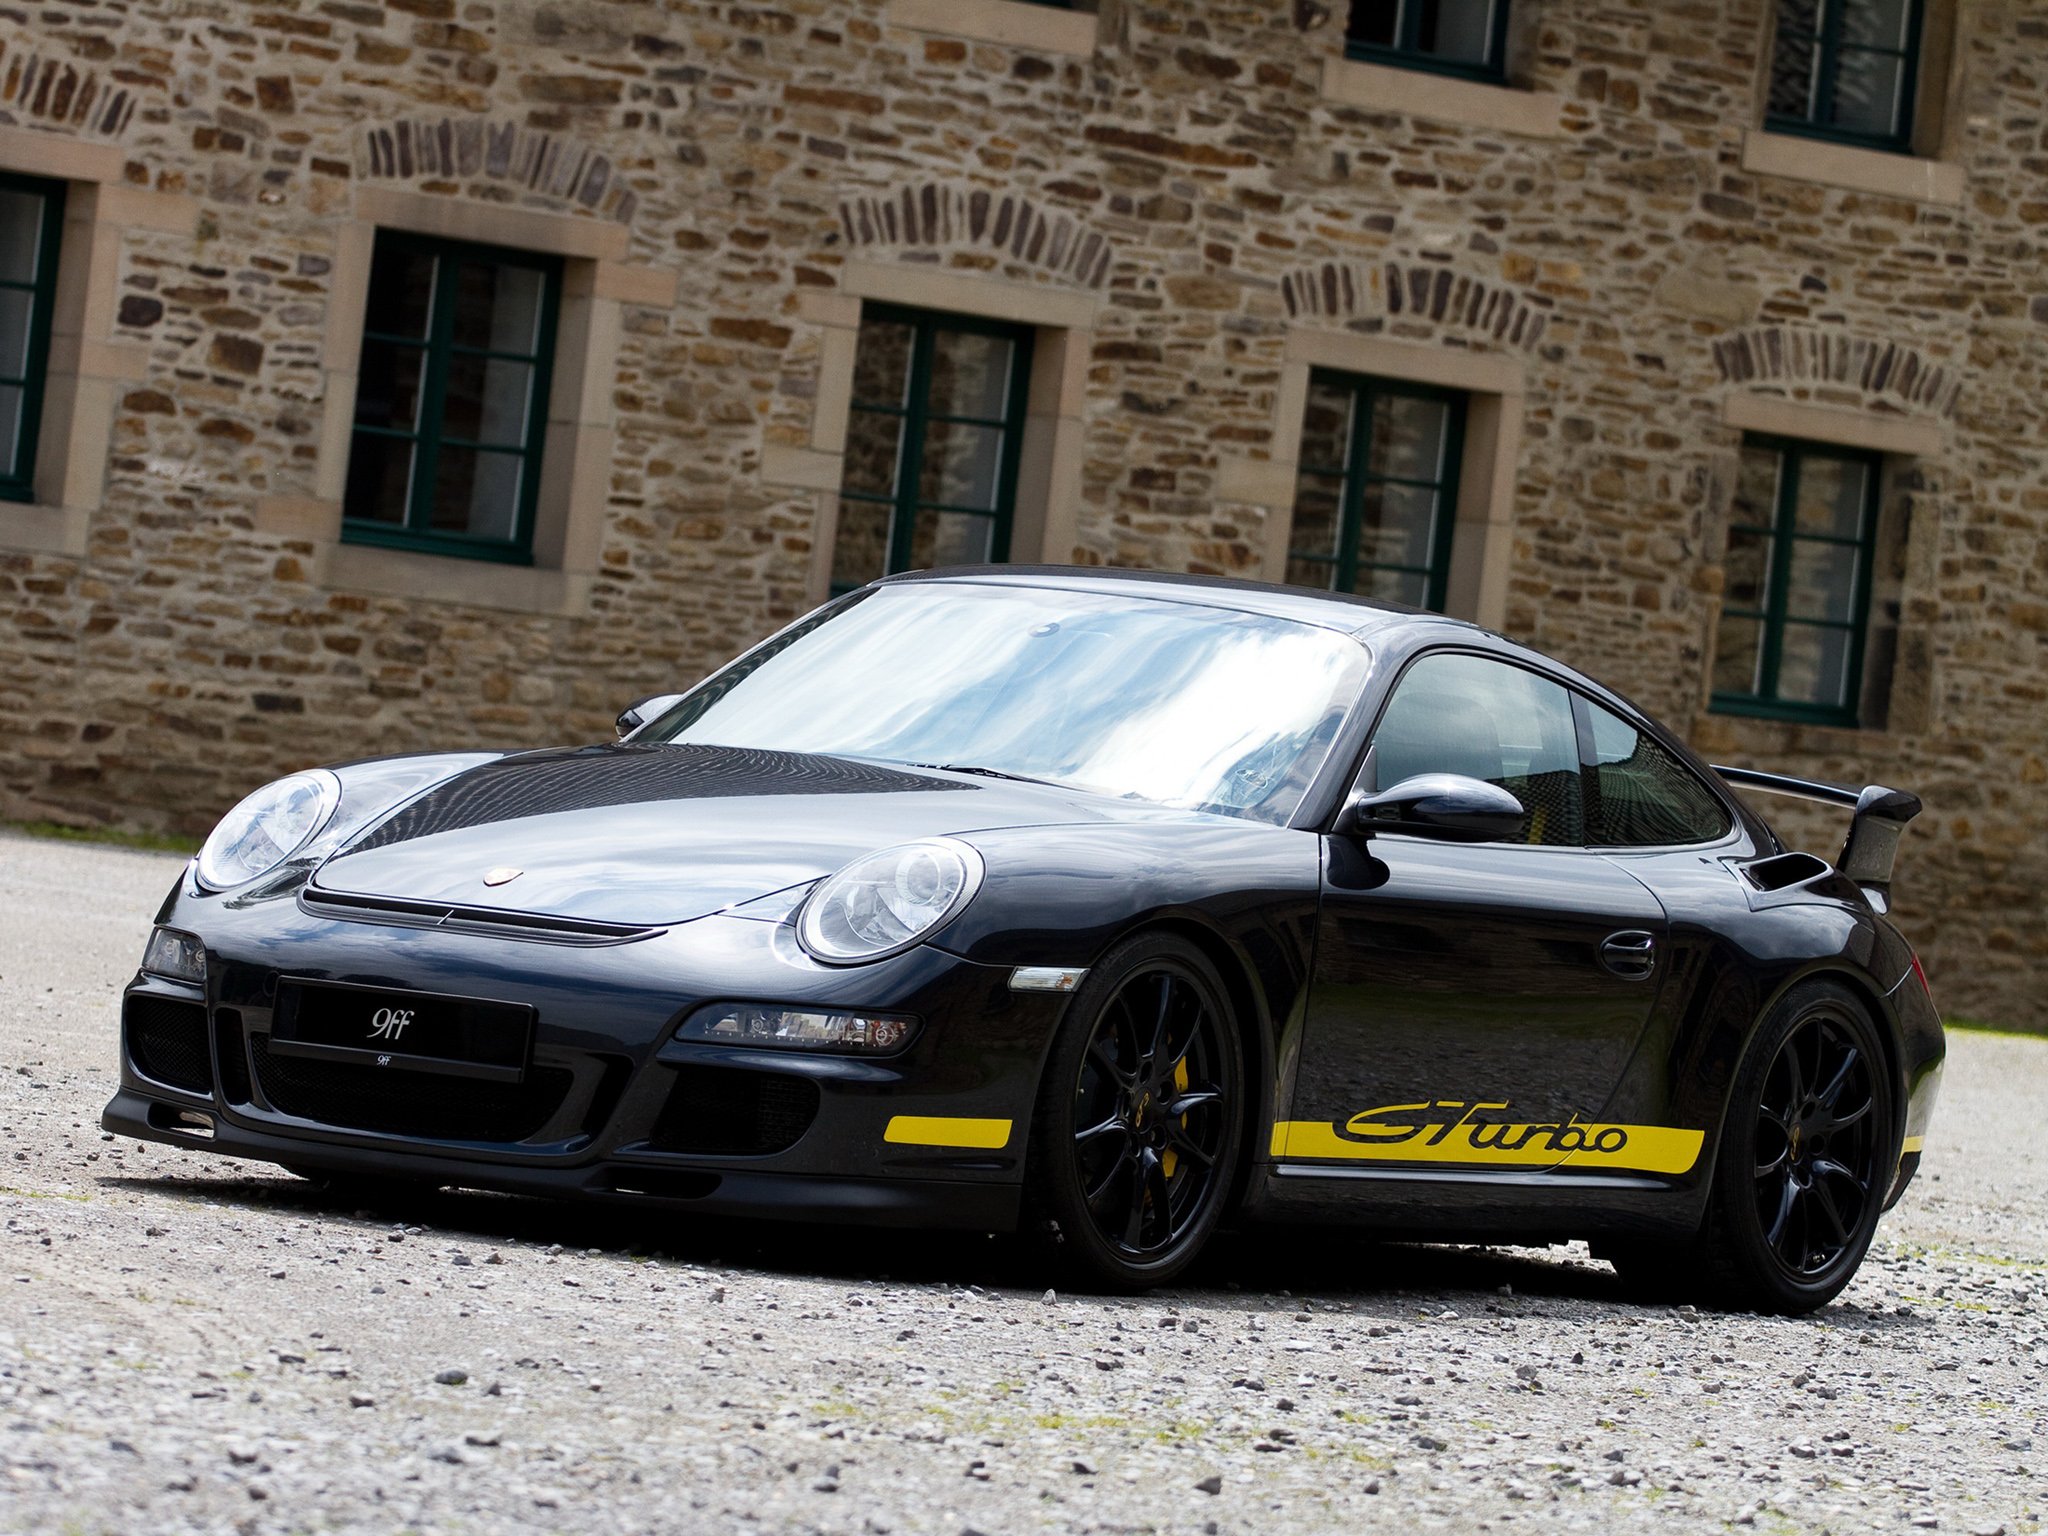 9ff, Porsche, 911, Gt turbo 1200, Coupe,  997 , Modified, Cars, 2012 Wallpaper